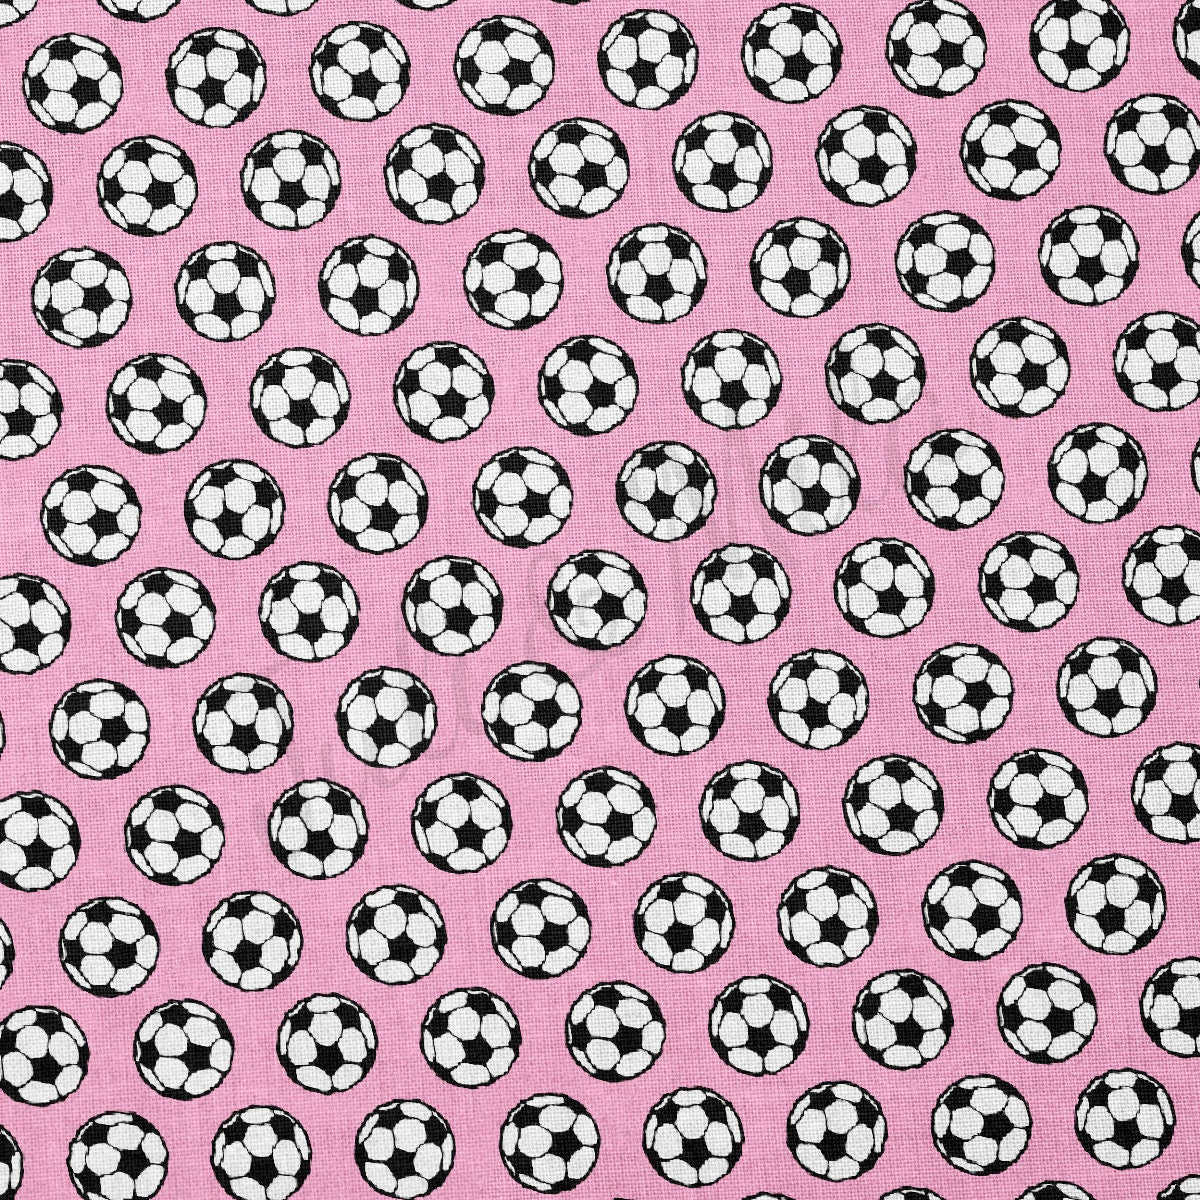 100% Cotton Fabric CTN2465 Soccer